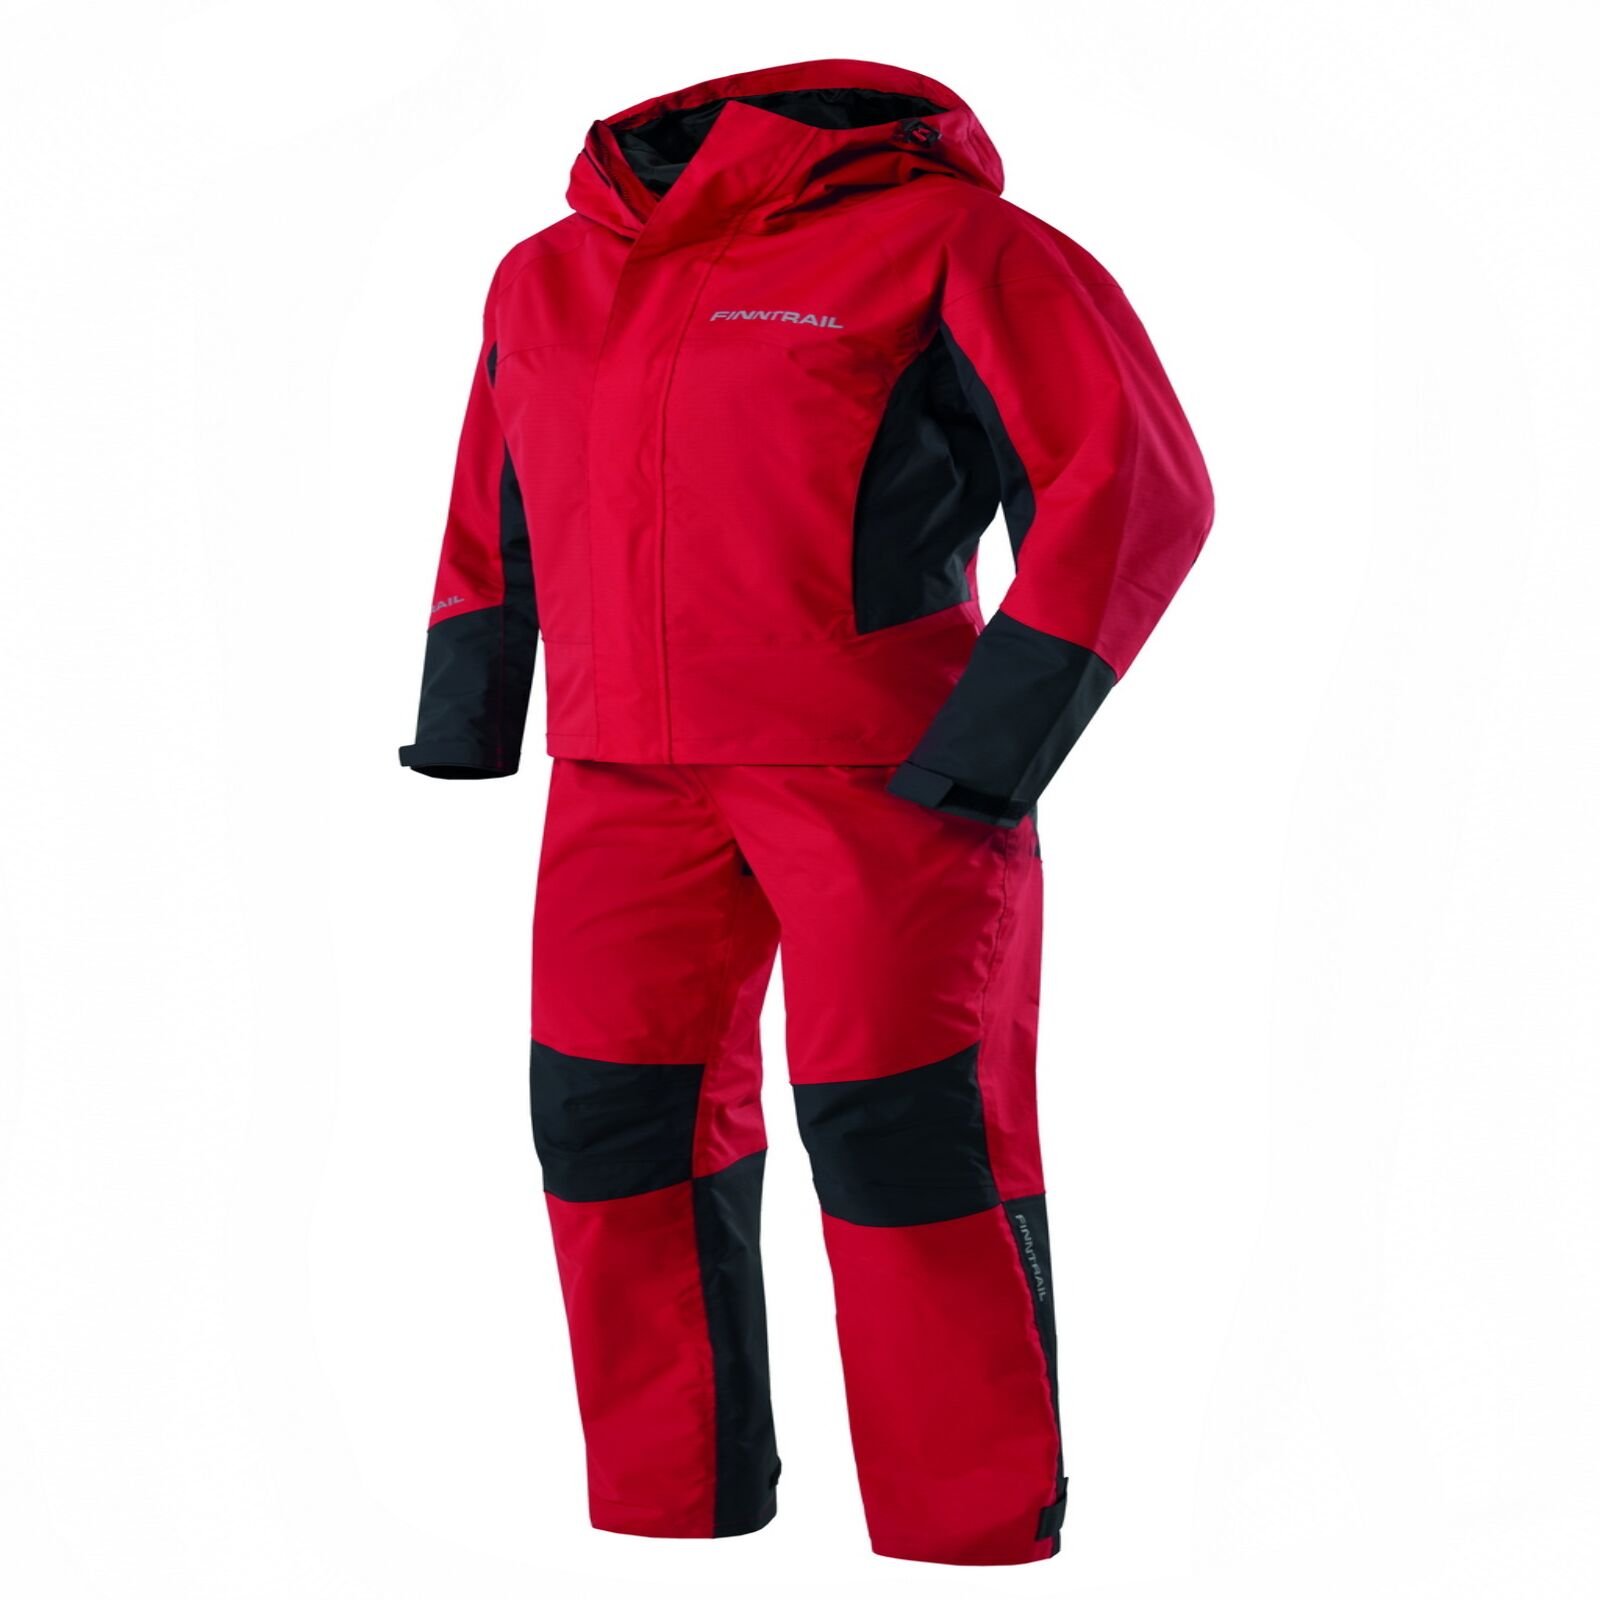 Obrázek produktu Finntrail Suit Sierra Lady Red 3450Red-MASTER